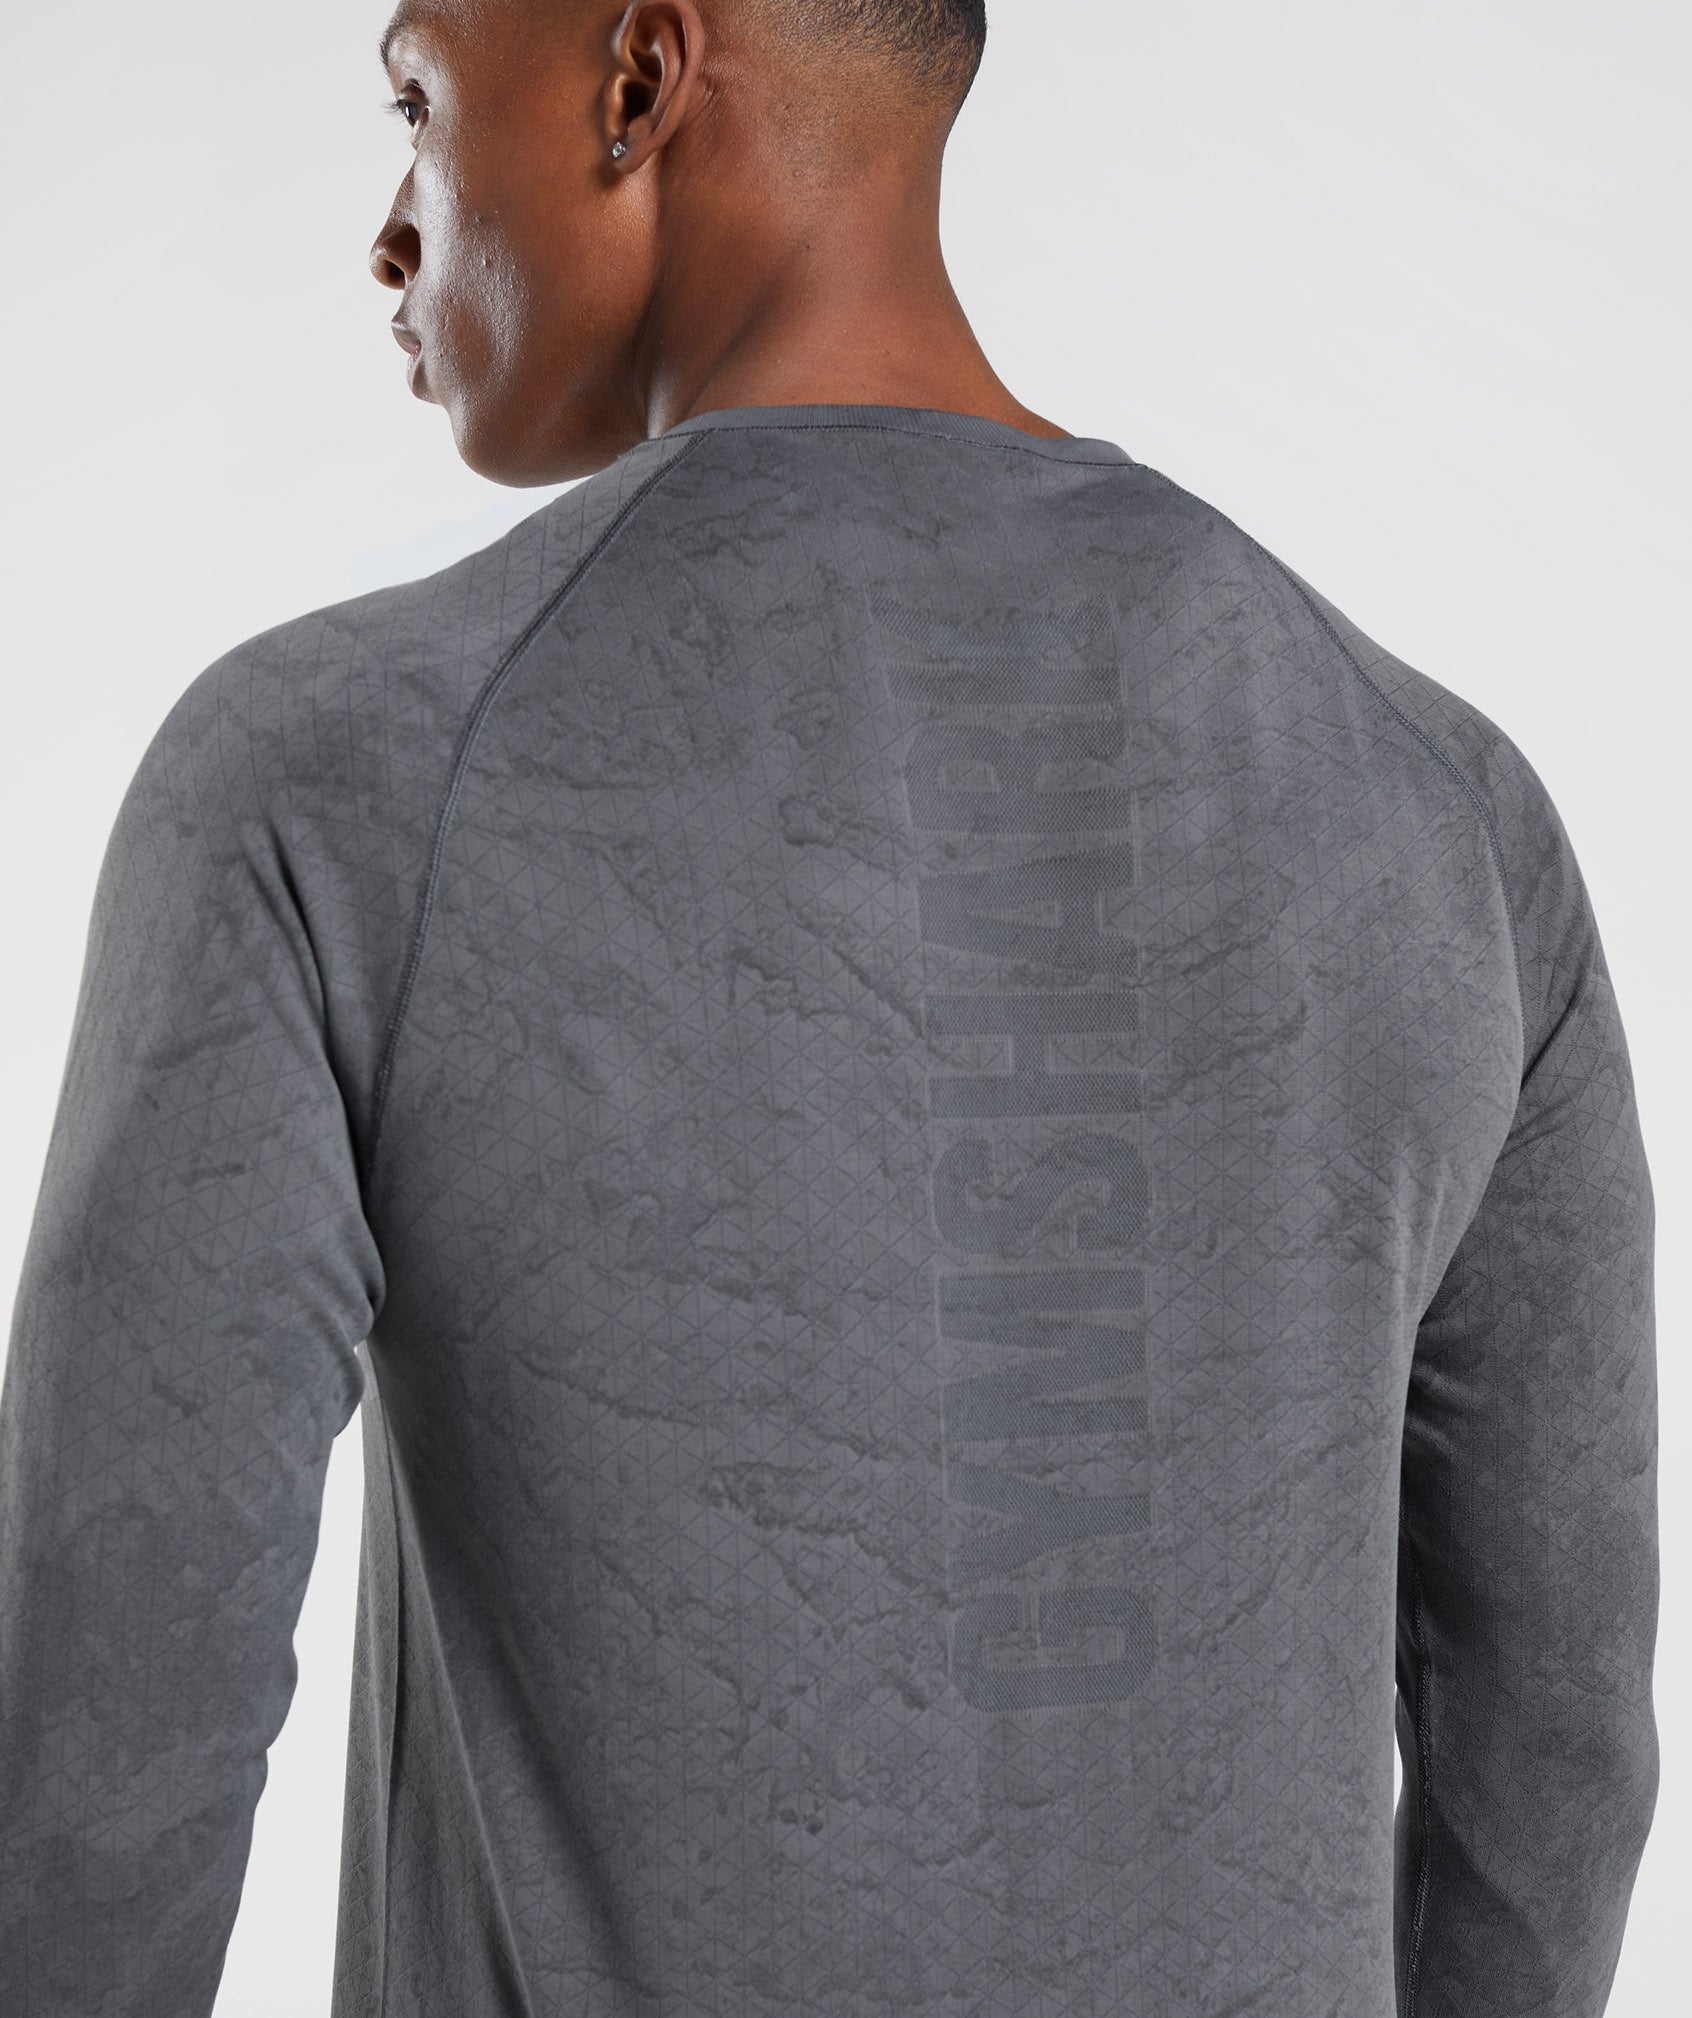 Geo Seamless Long Sleeve T-Shirt in Charcoal Grey/Black